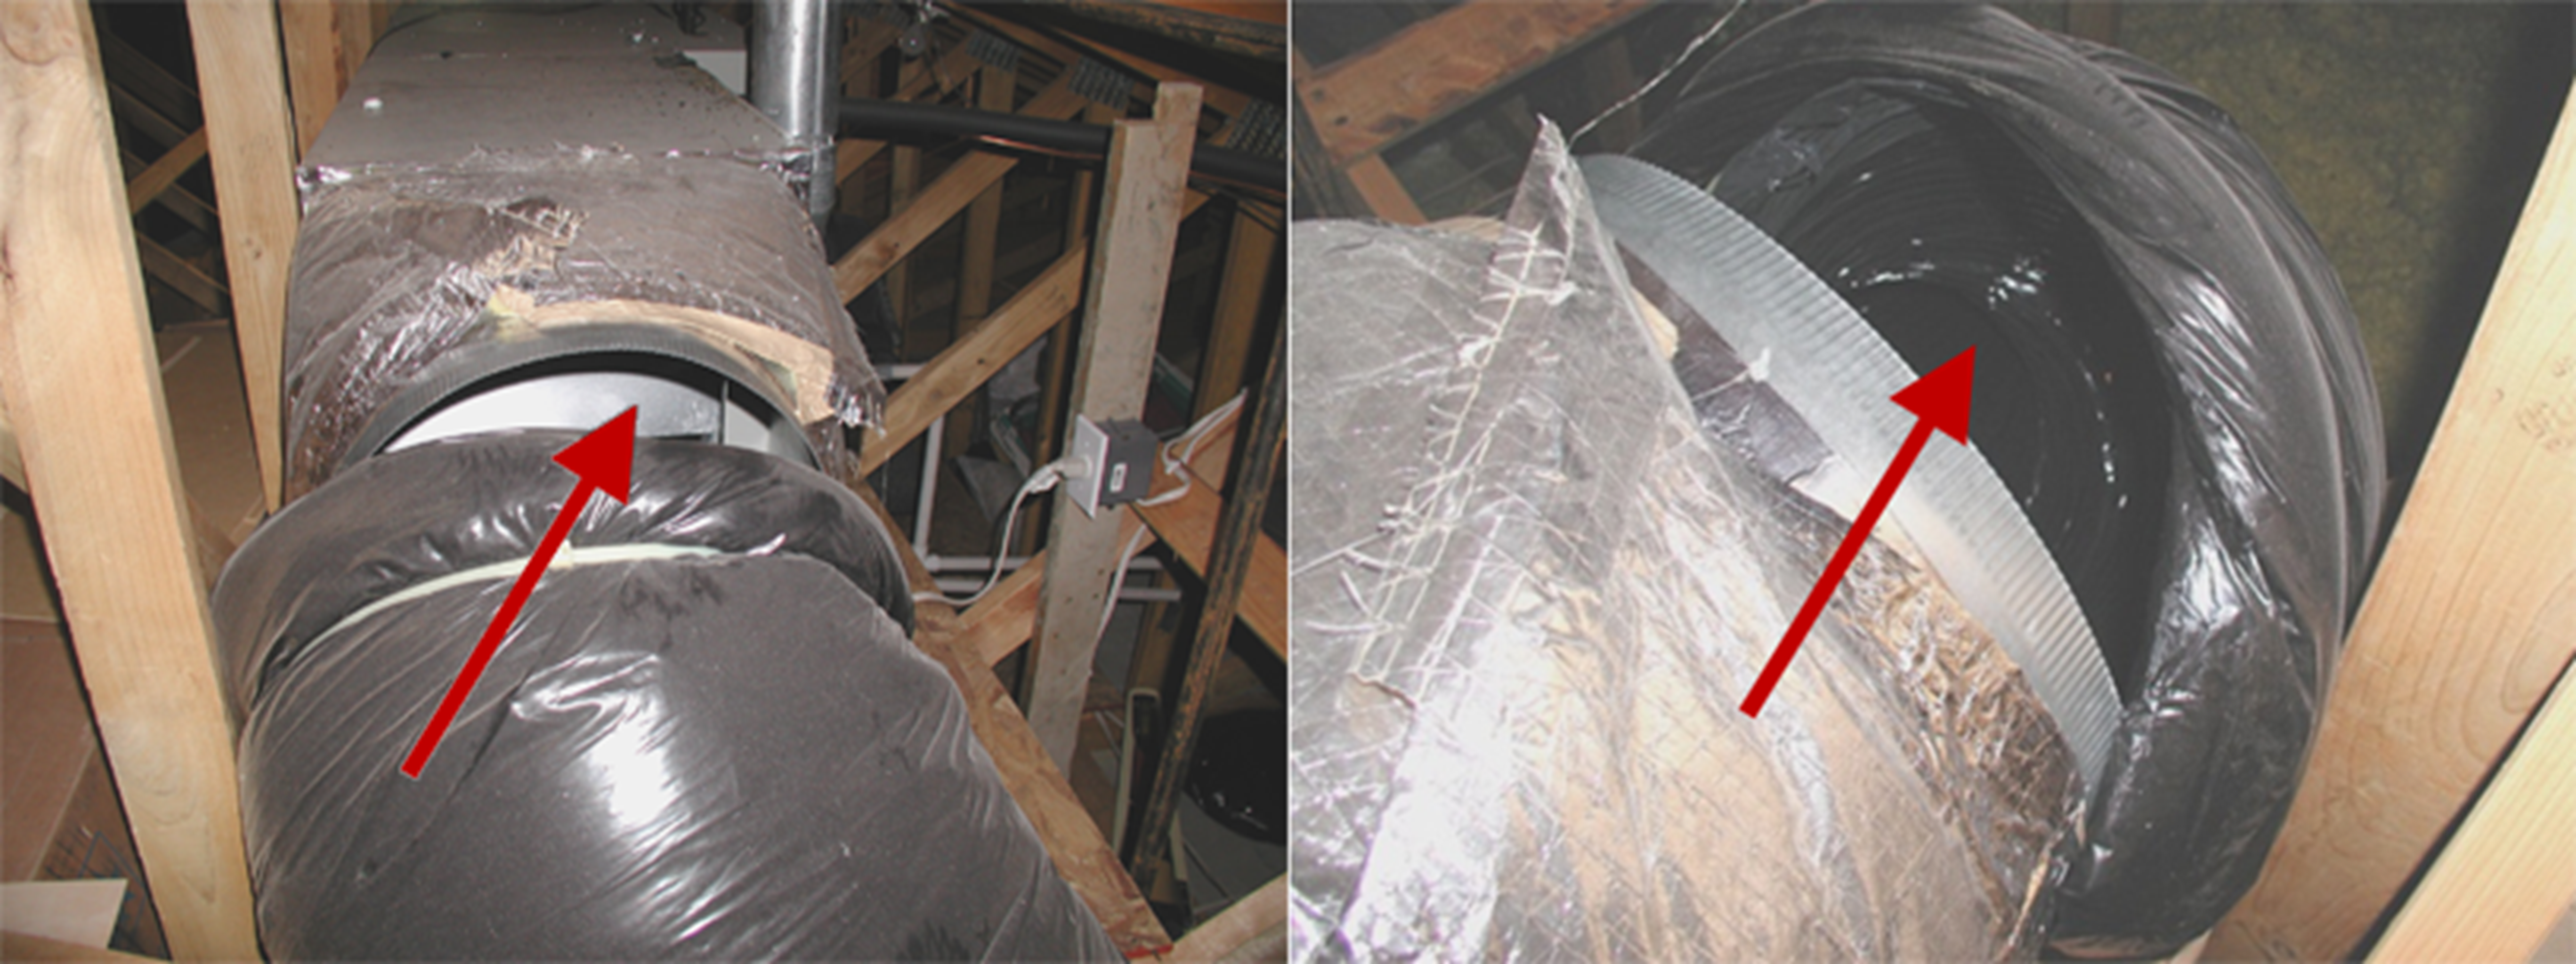 Leaking air duct in attic